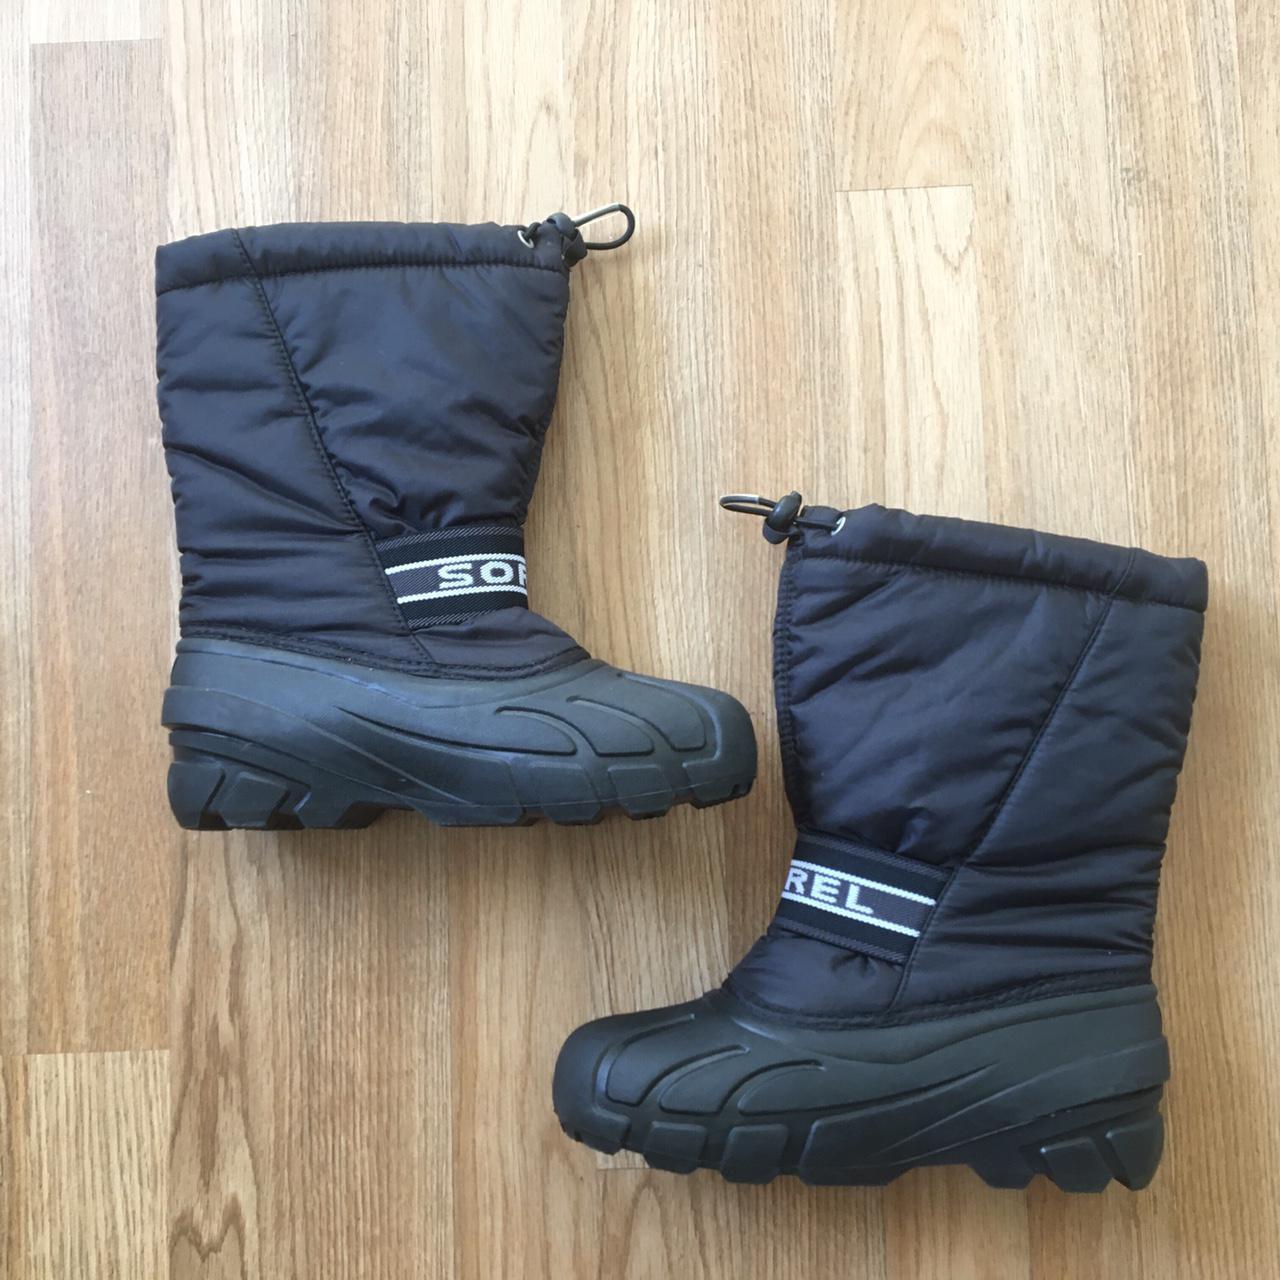 Sorel Kids Cub Winter Boots in Black. Almost new,... - Depop